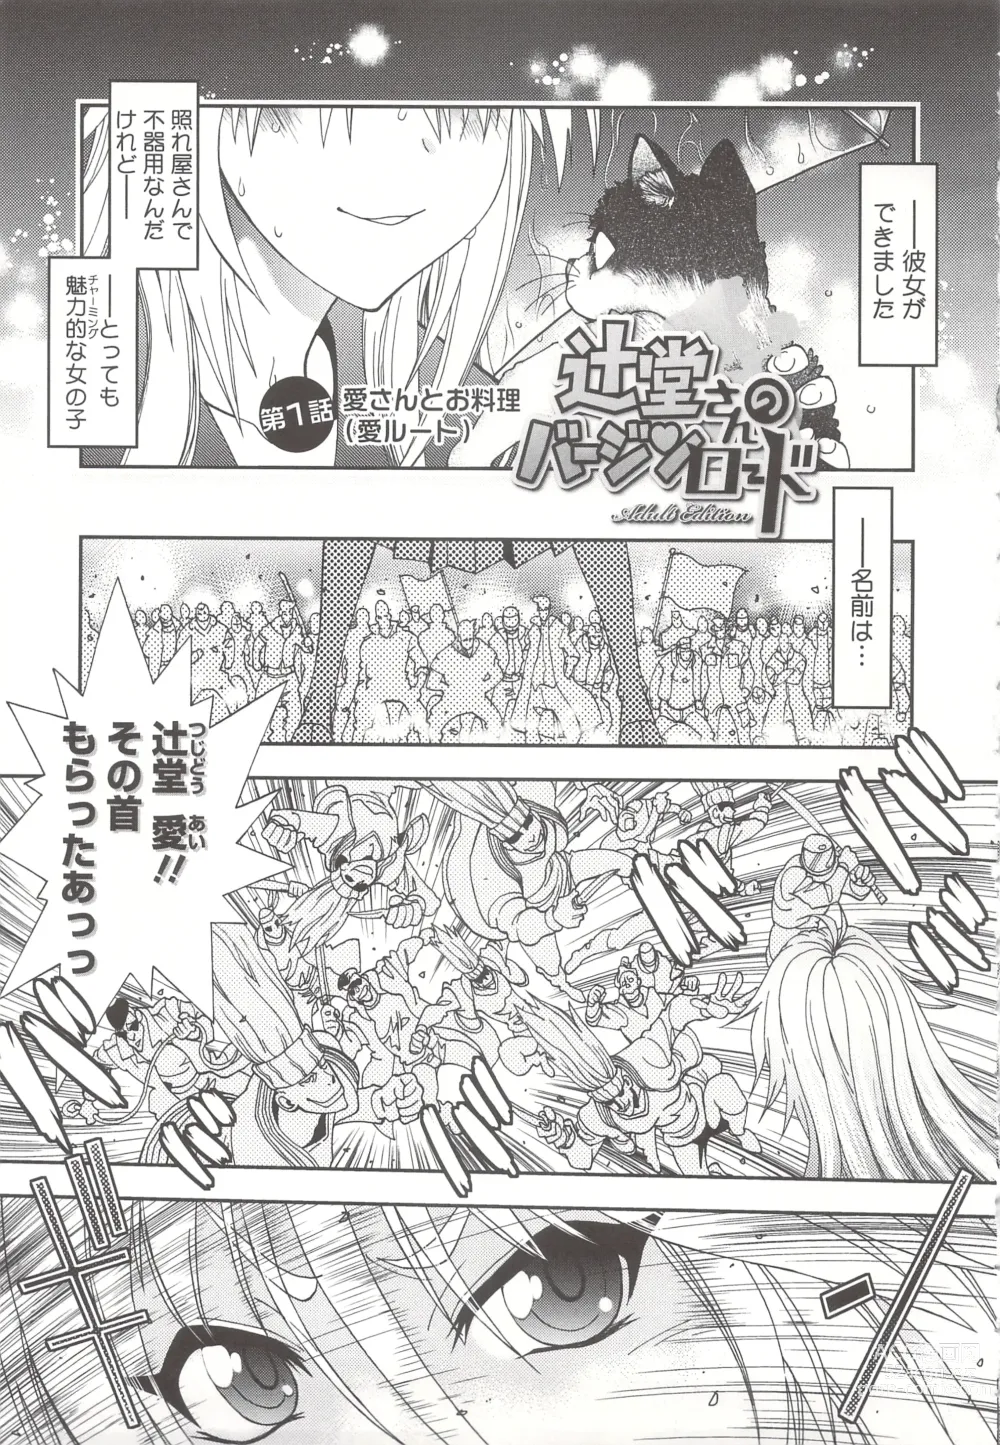 Page 9 of manga Tsujidou-san no Virgin Road Adult Edition